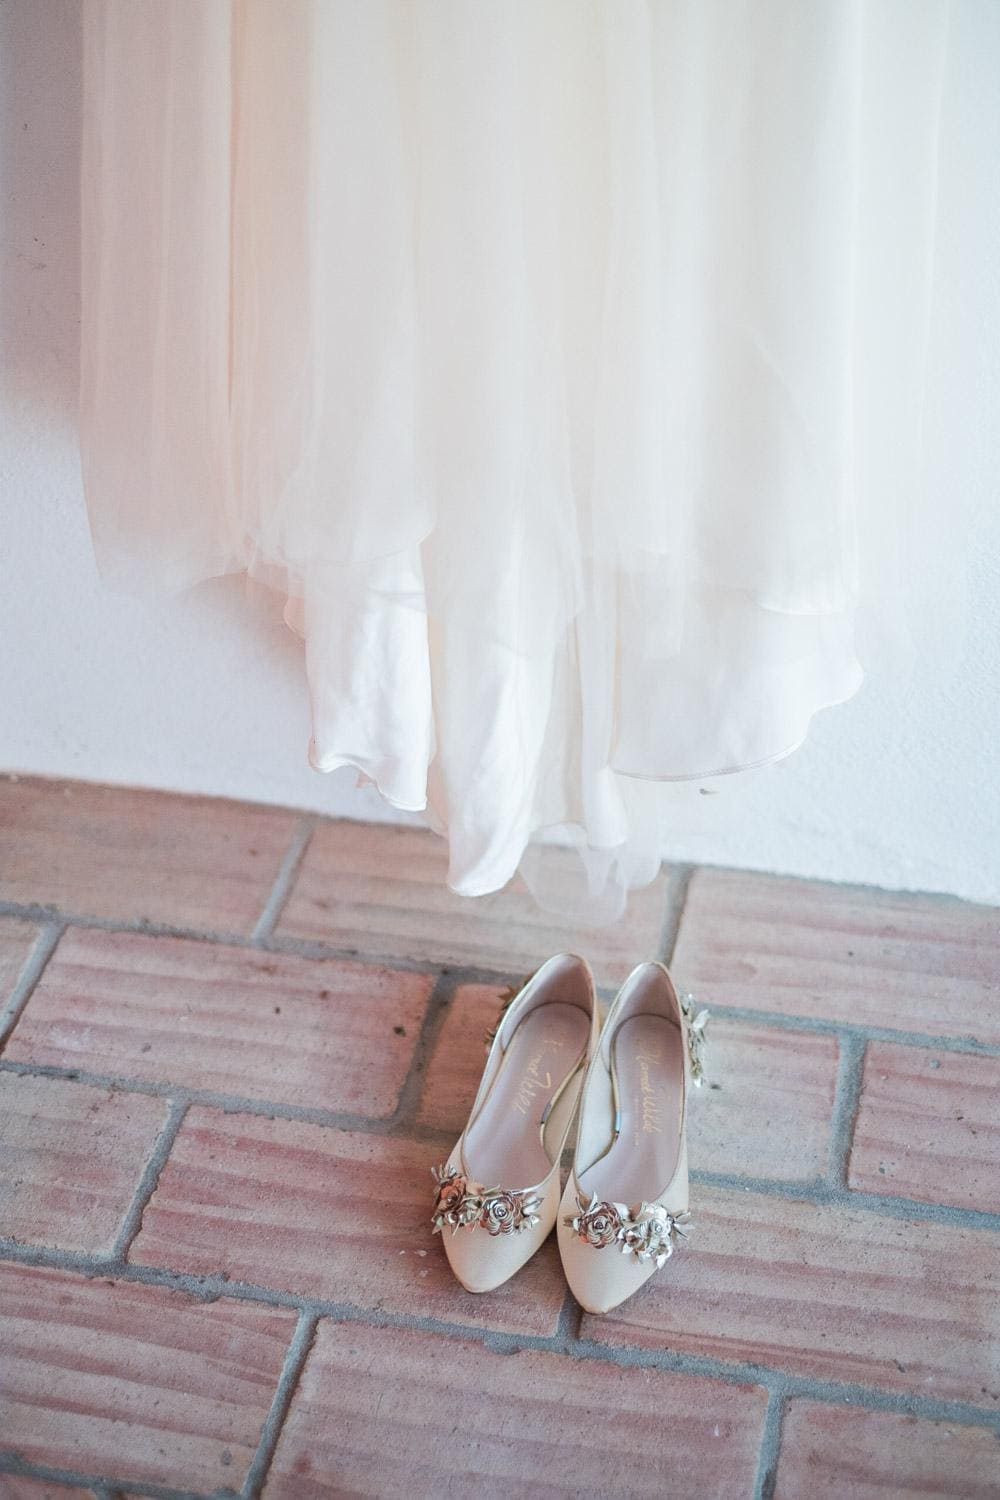 the lace atelier wedding dress harriet wilde shoes #rusticwedding #thelaceatelier #harrietwilde #portugalvenue jesuscaballero.com